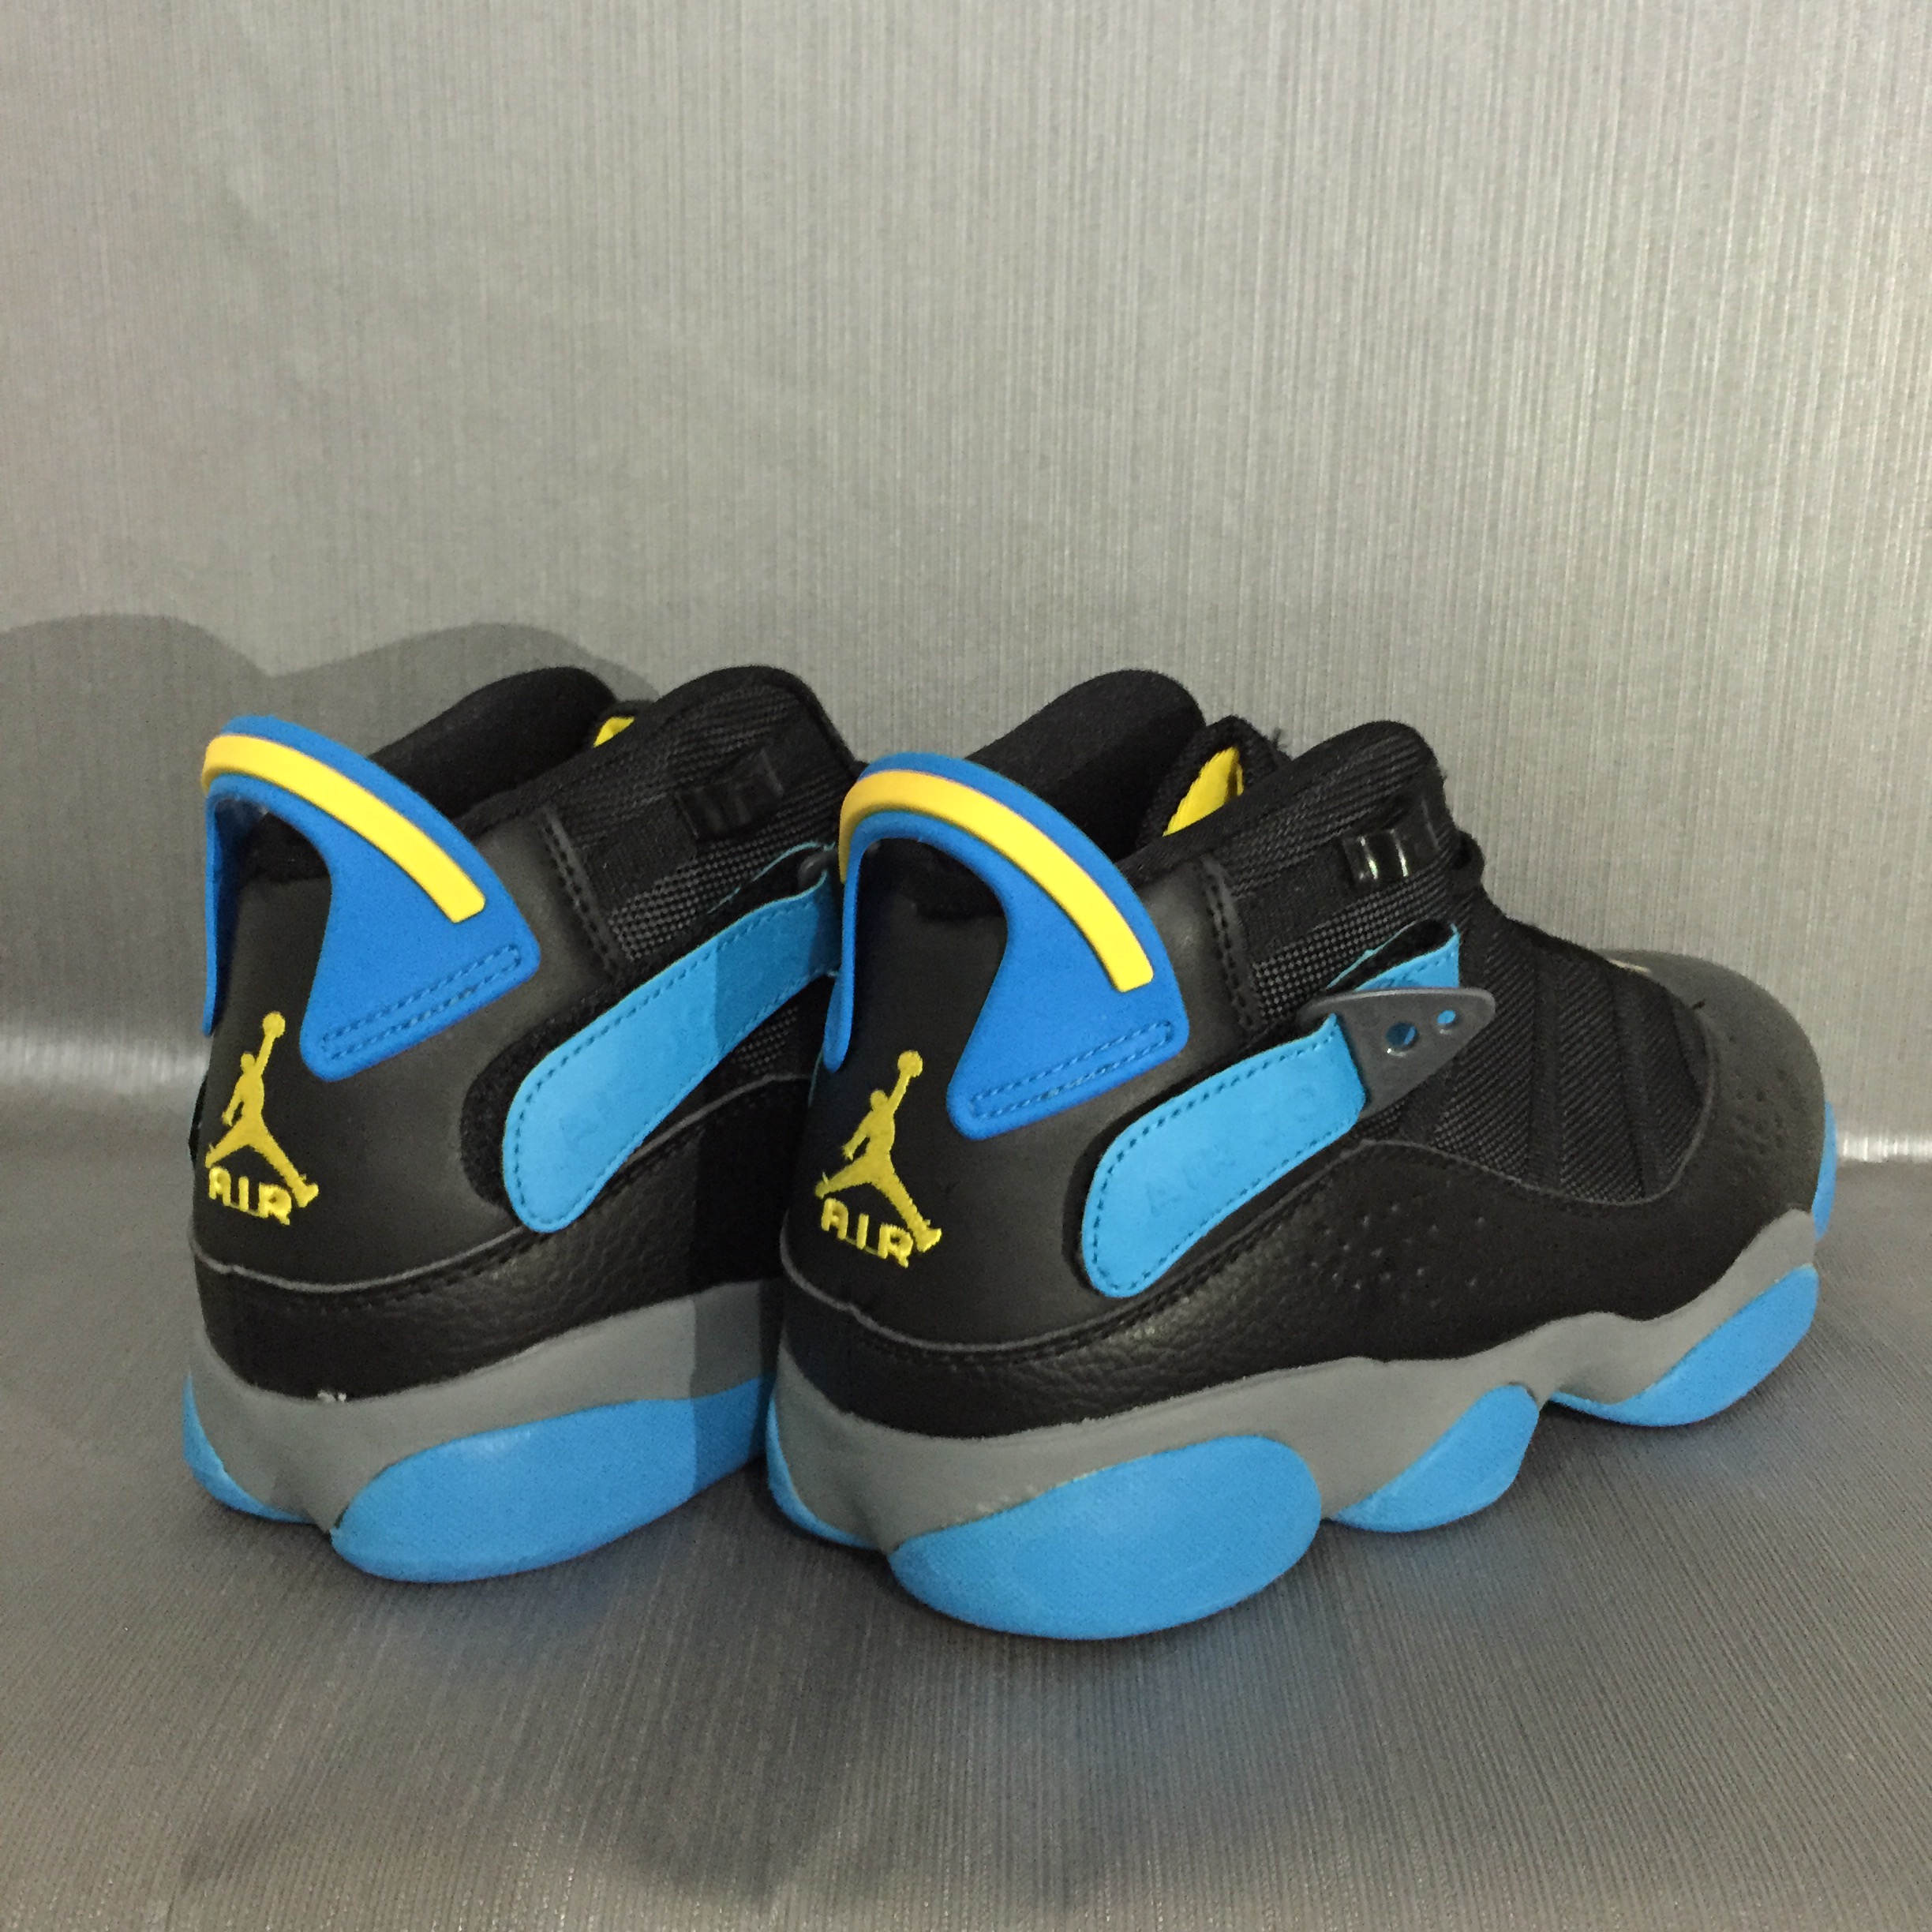 2017 Air Jordan 6 Rings Black Blue Yellow Shoes - Click Image to Close